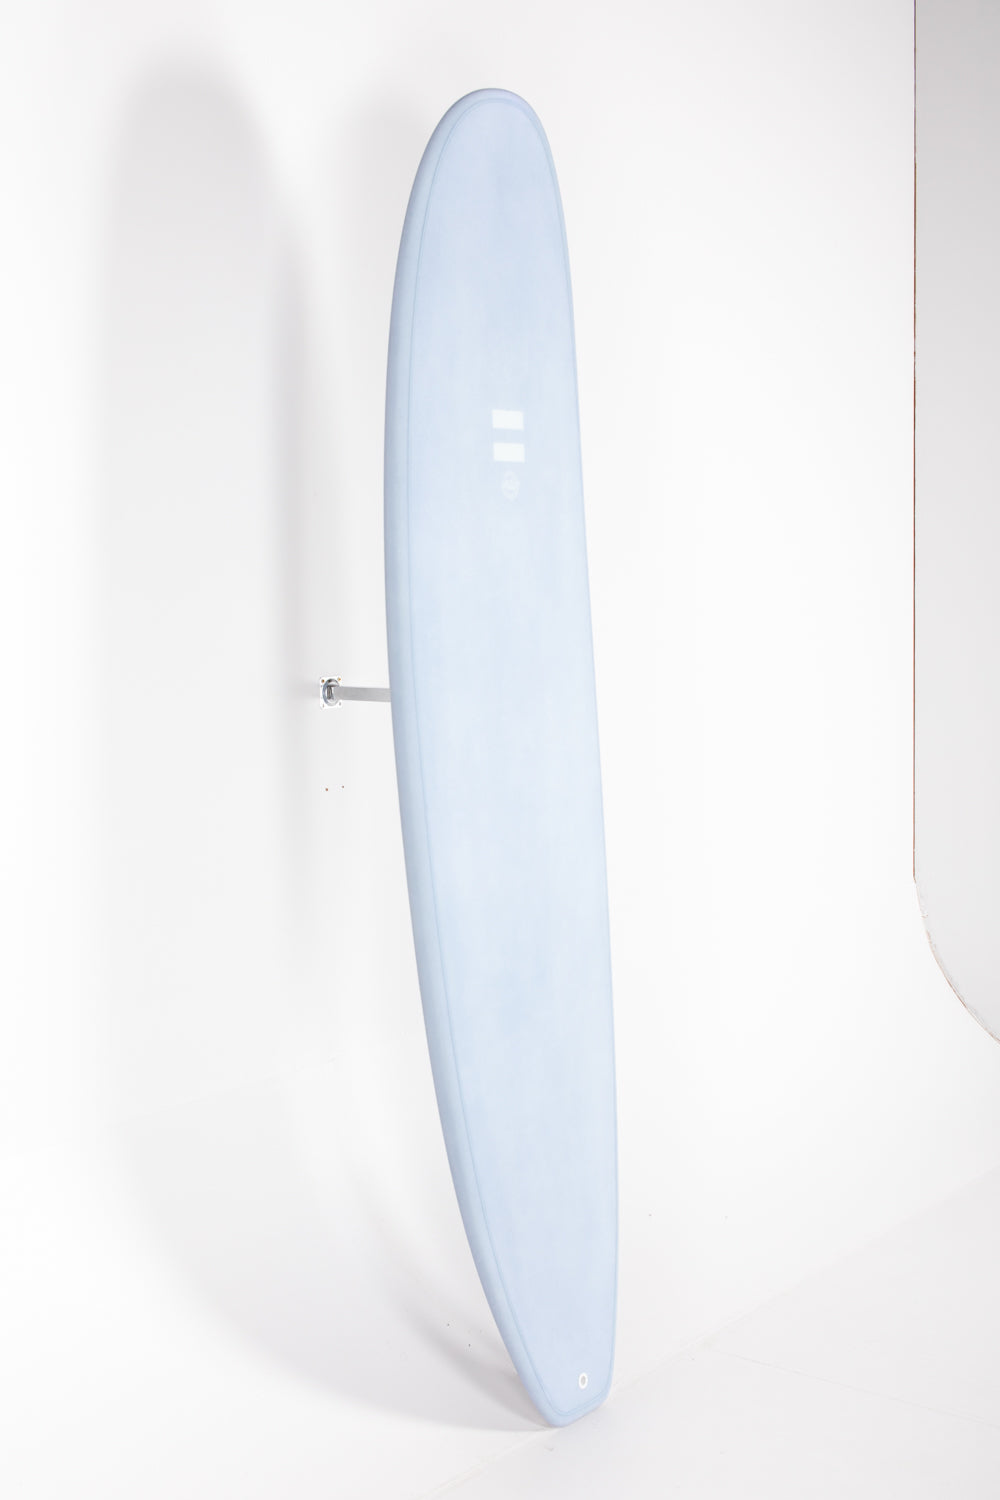 Indio Surfboards - MID LENGTH Light Blue - 7´0 x 21 3/8 x 2 7/8 